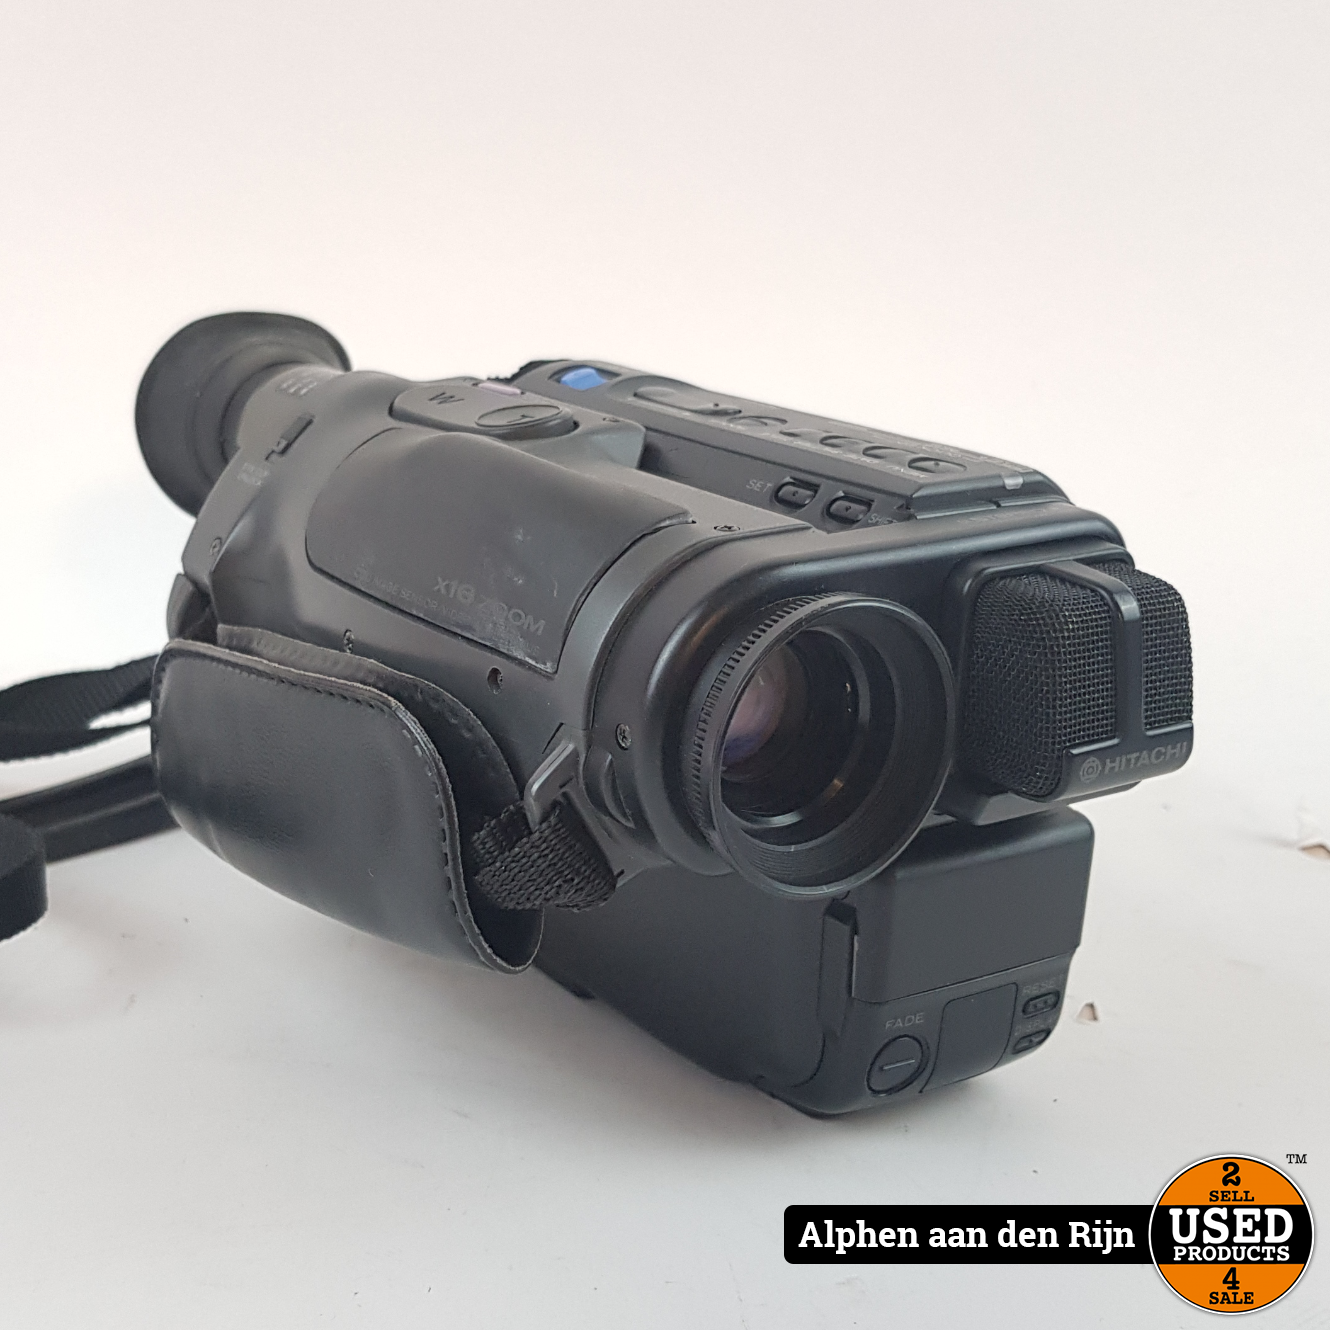 Hitachi VM-E25E Camera - Used Products Alphen aan den Rijn